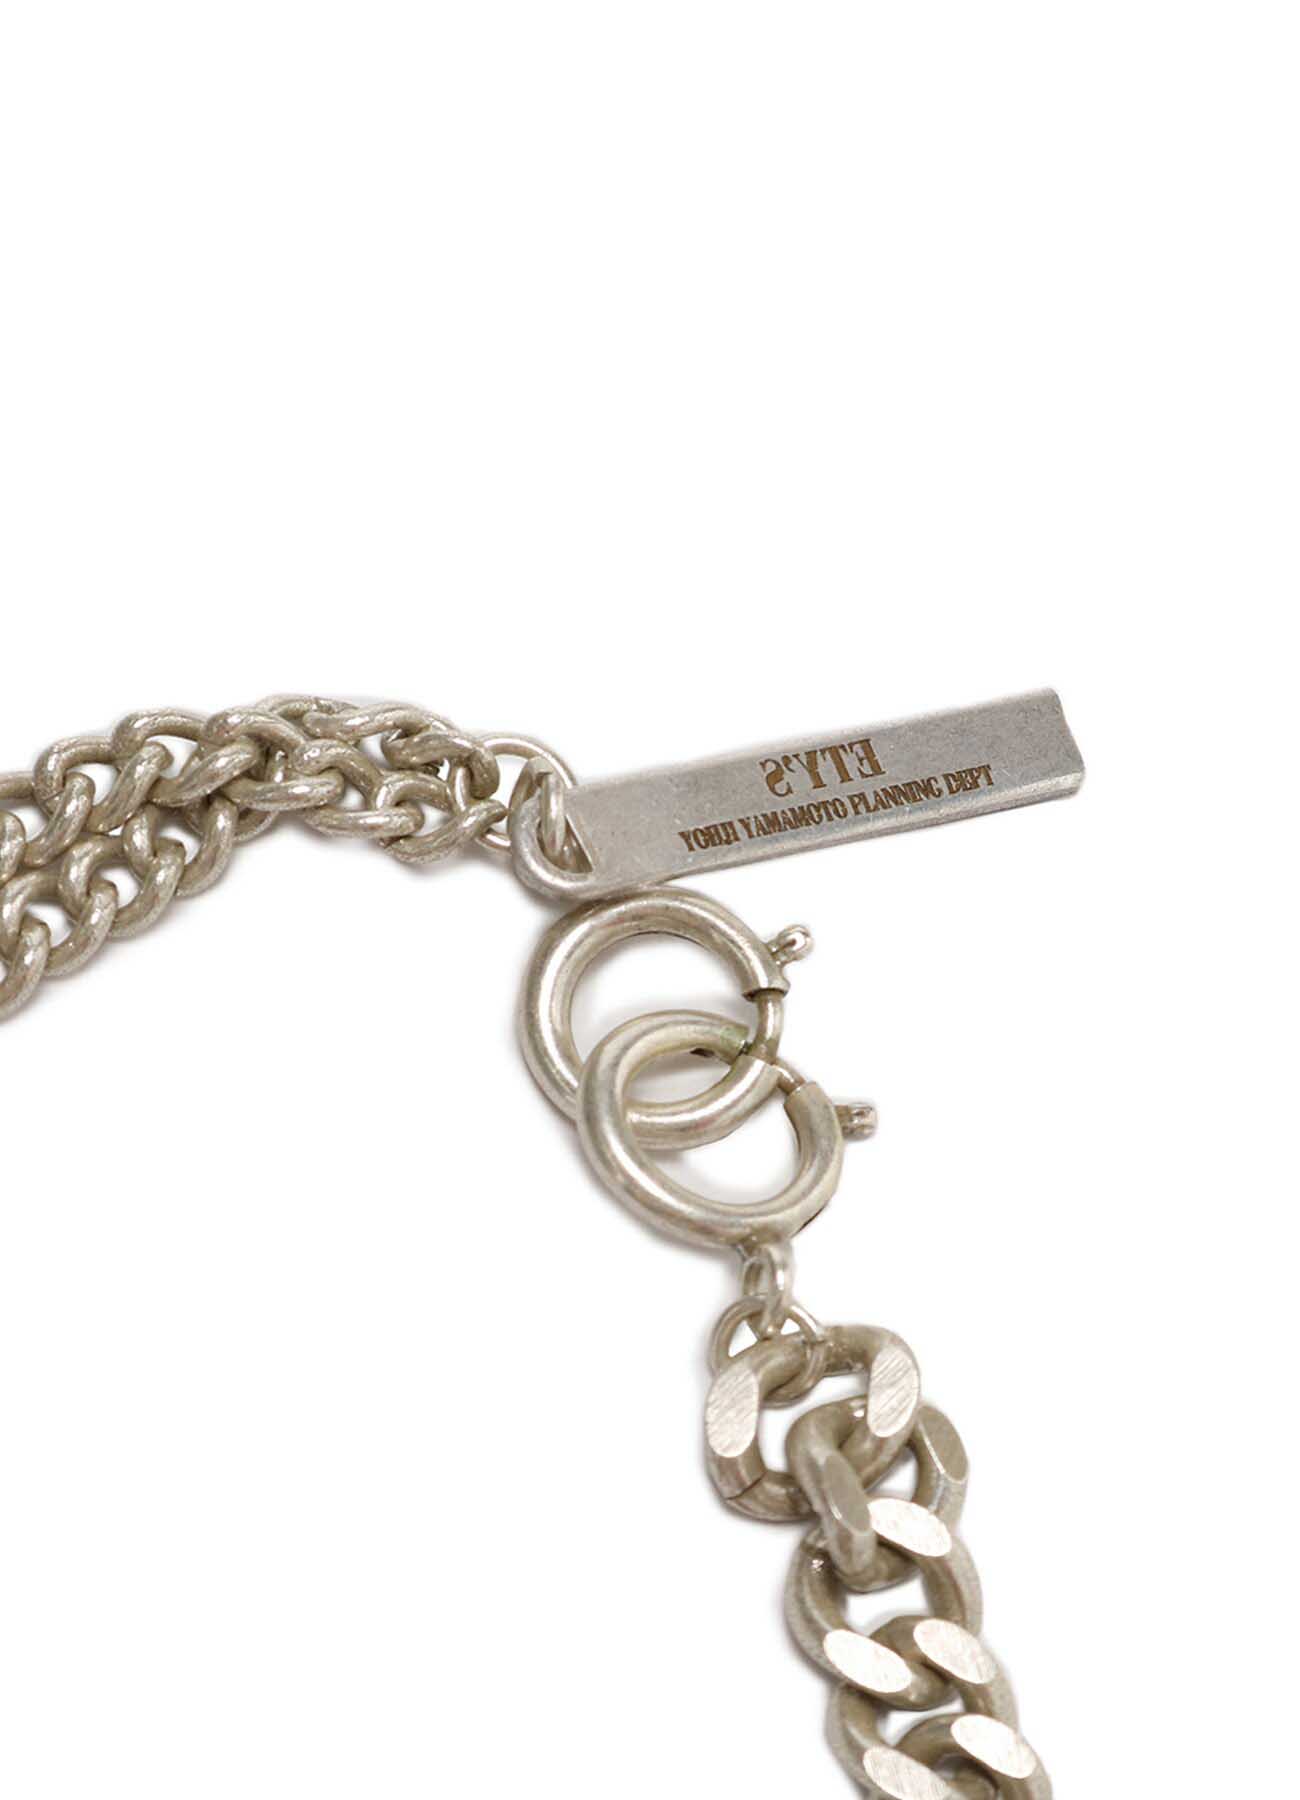 Brass 6-way Curved Chain Bracelet Necklace